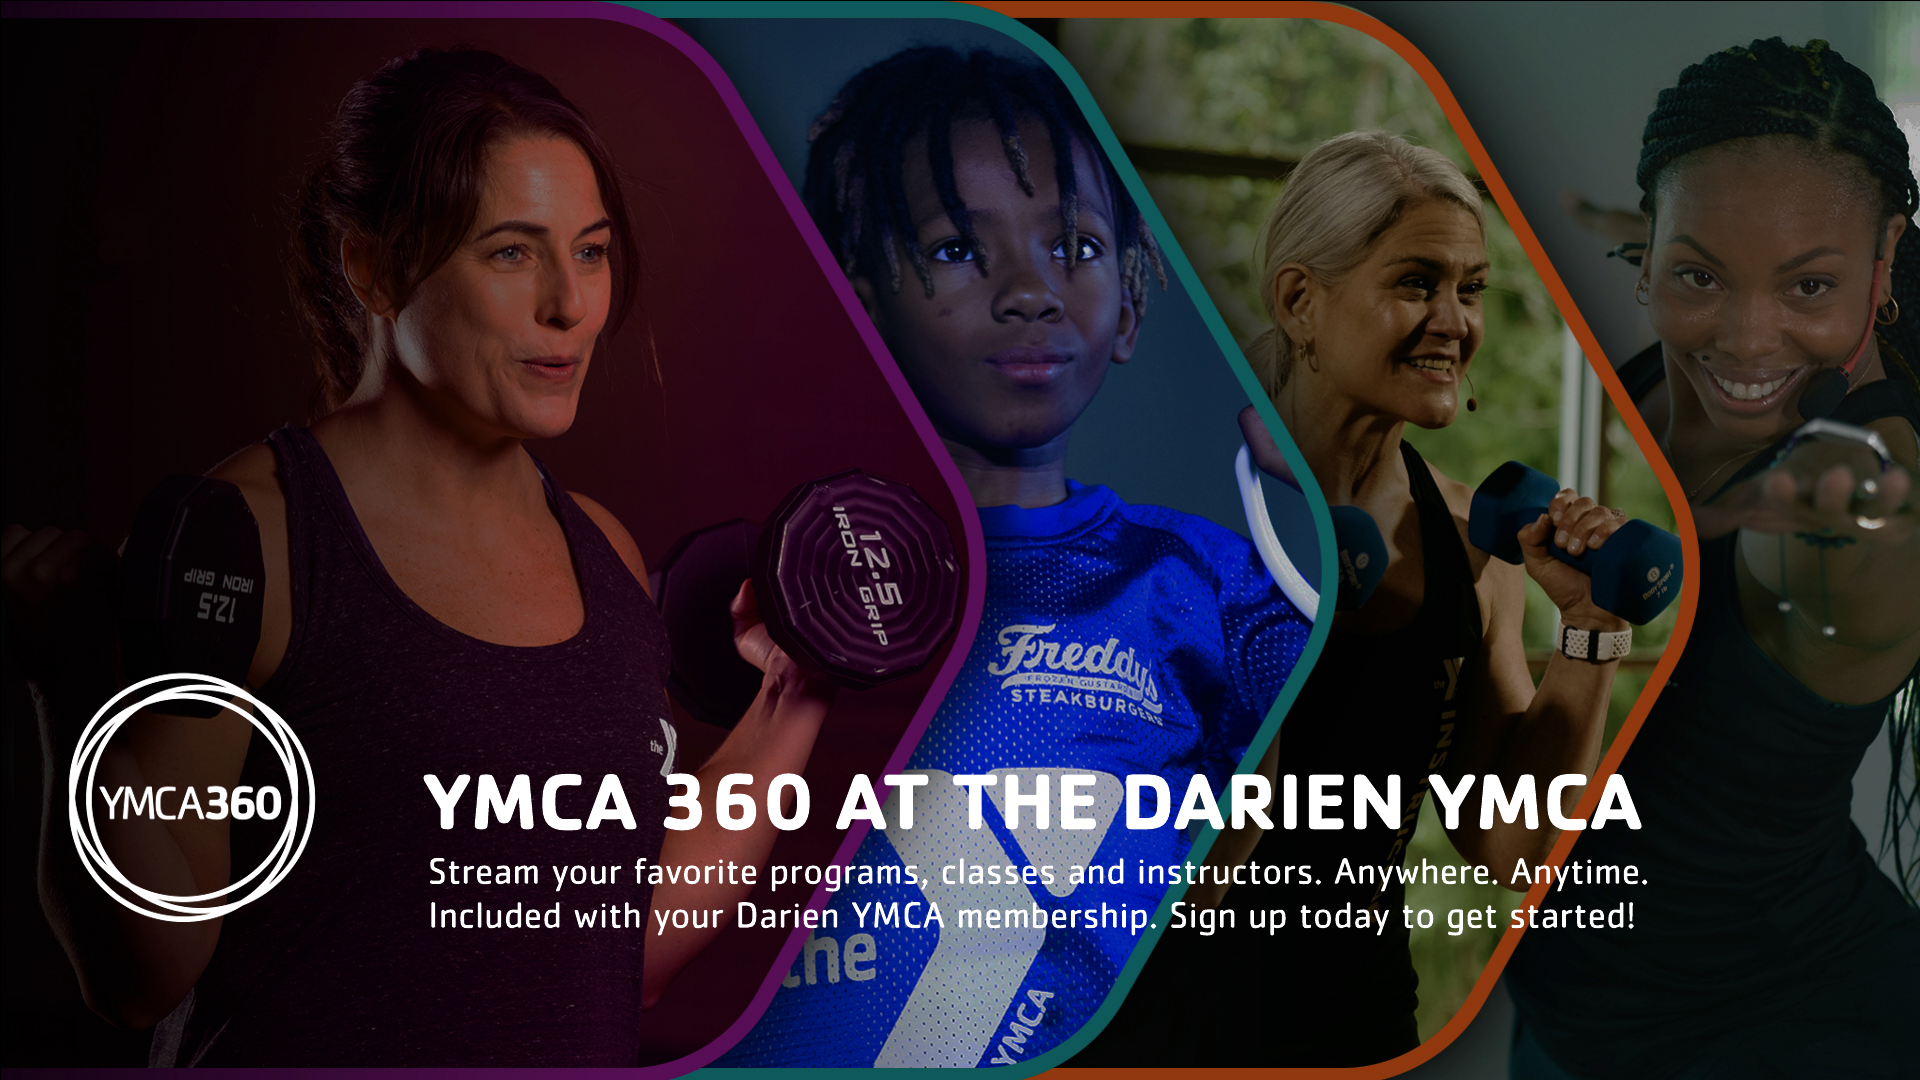 YMCA 360 at the Darien YMCA